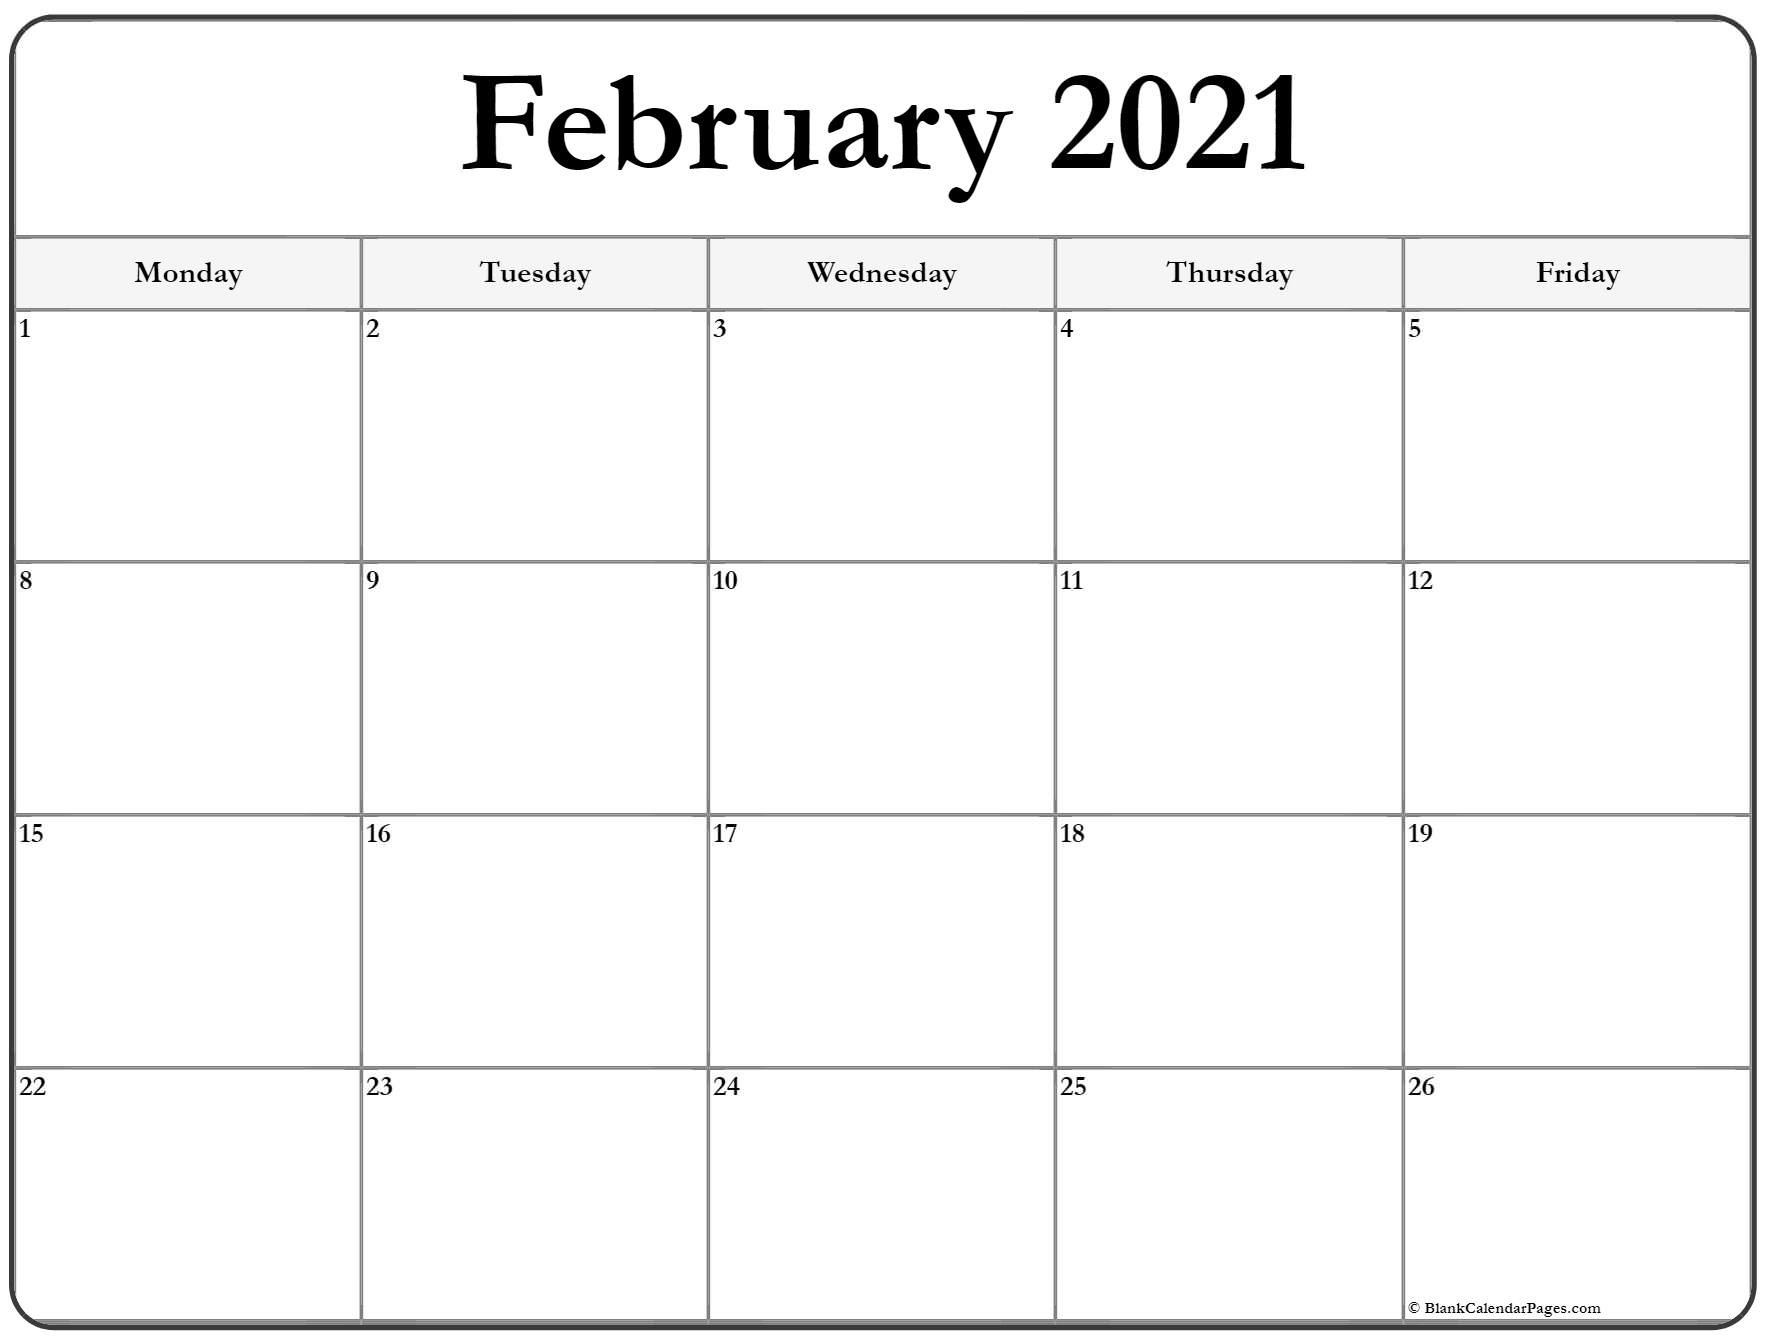 February 2021 Monday Calendar | Monday To Sunday-Printable Calendar Starting Monday 2021